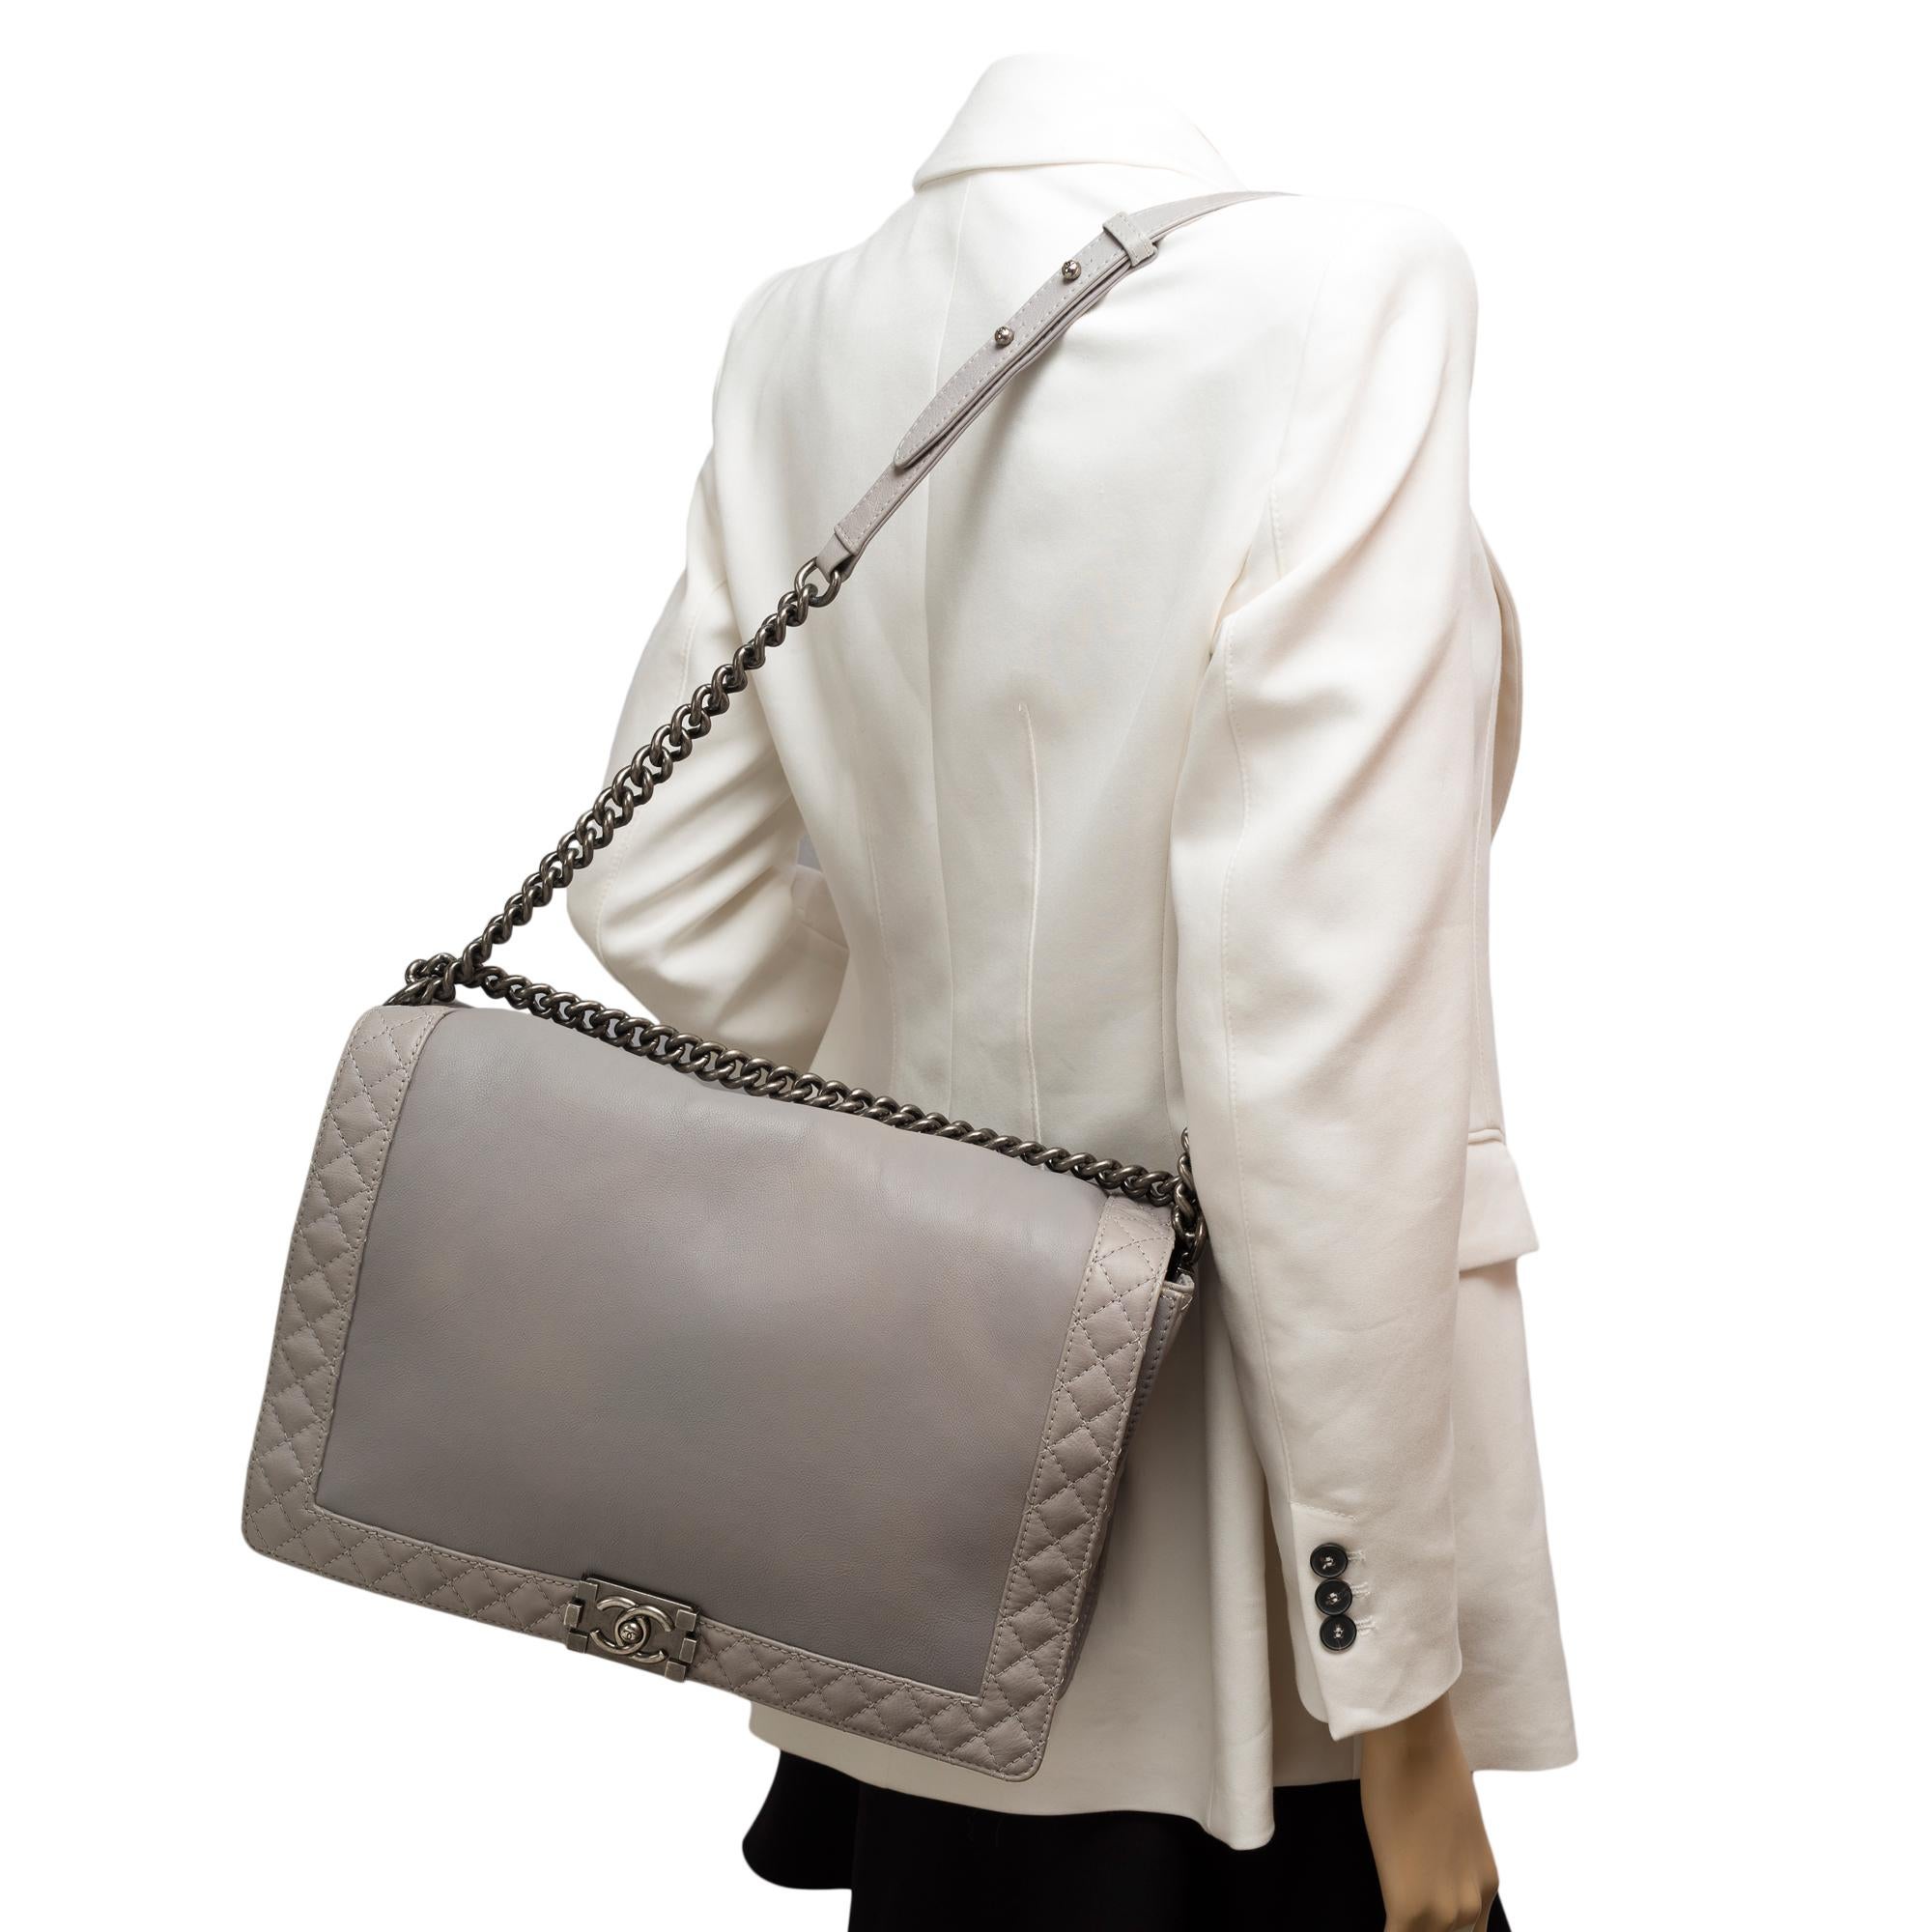 Chanel Boy Reverso Maxi Boy shoulder bag in Grey leather, RHW For Sale 8